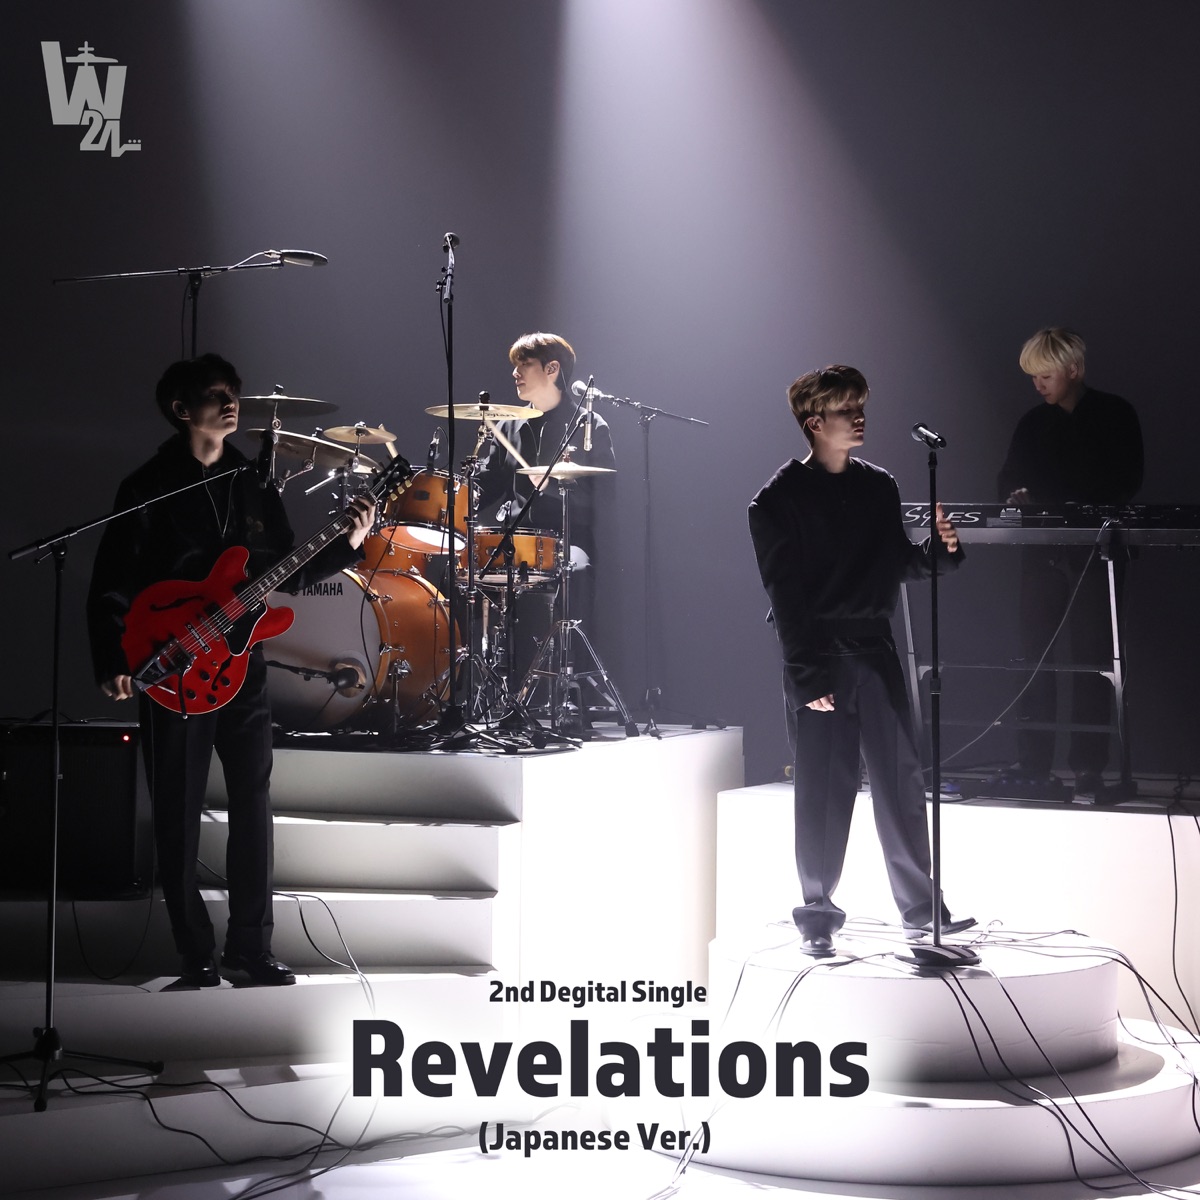 W24 – Revelations (Japanese Ver.) – Single